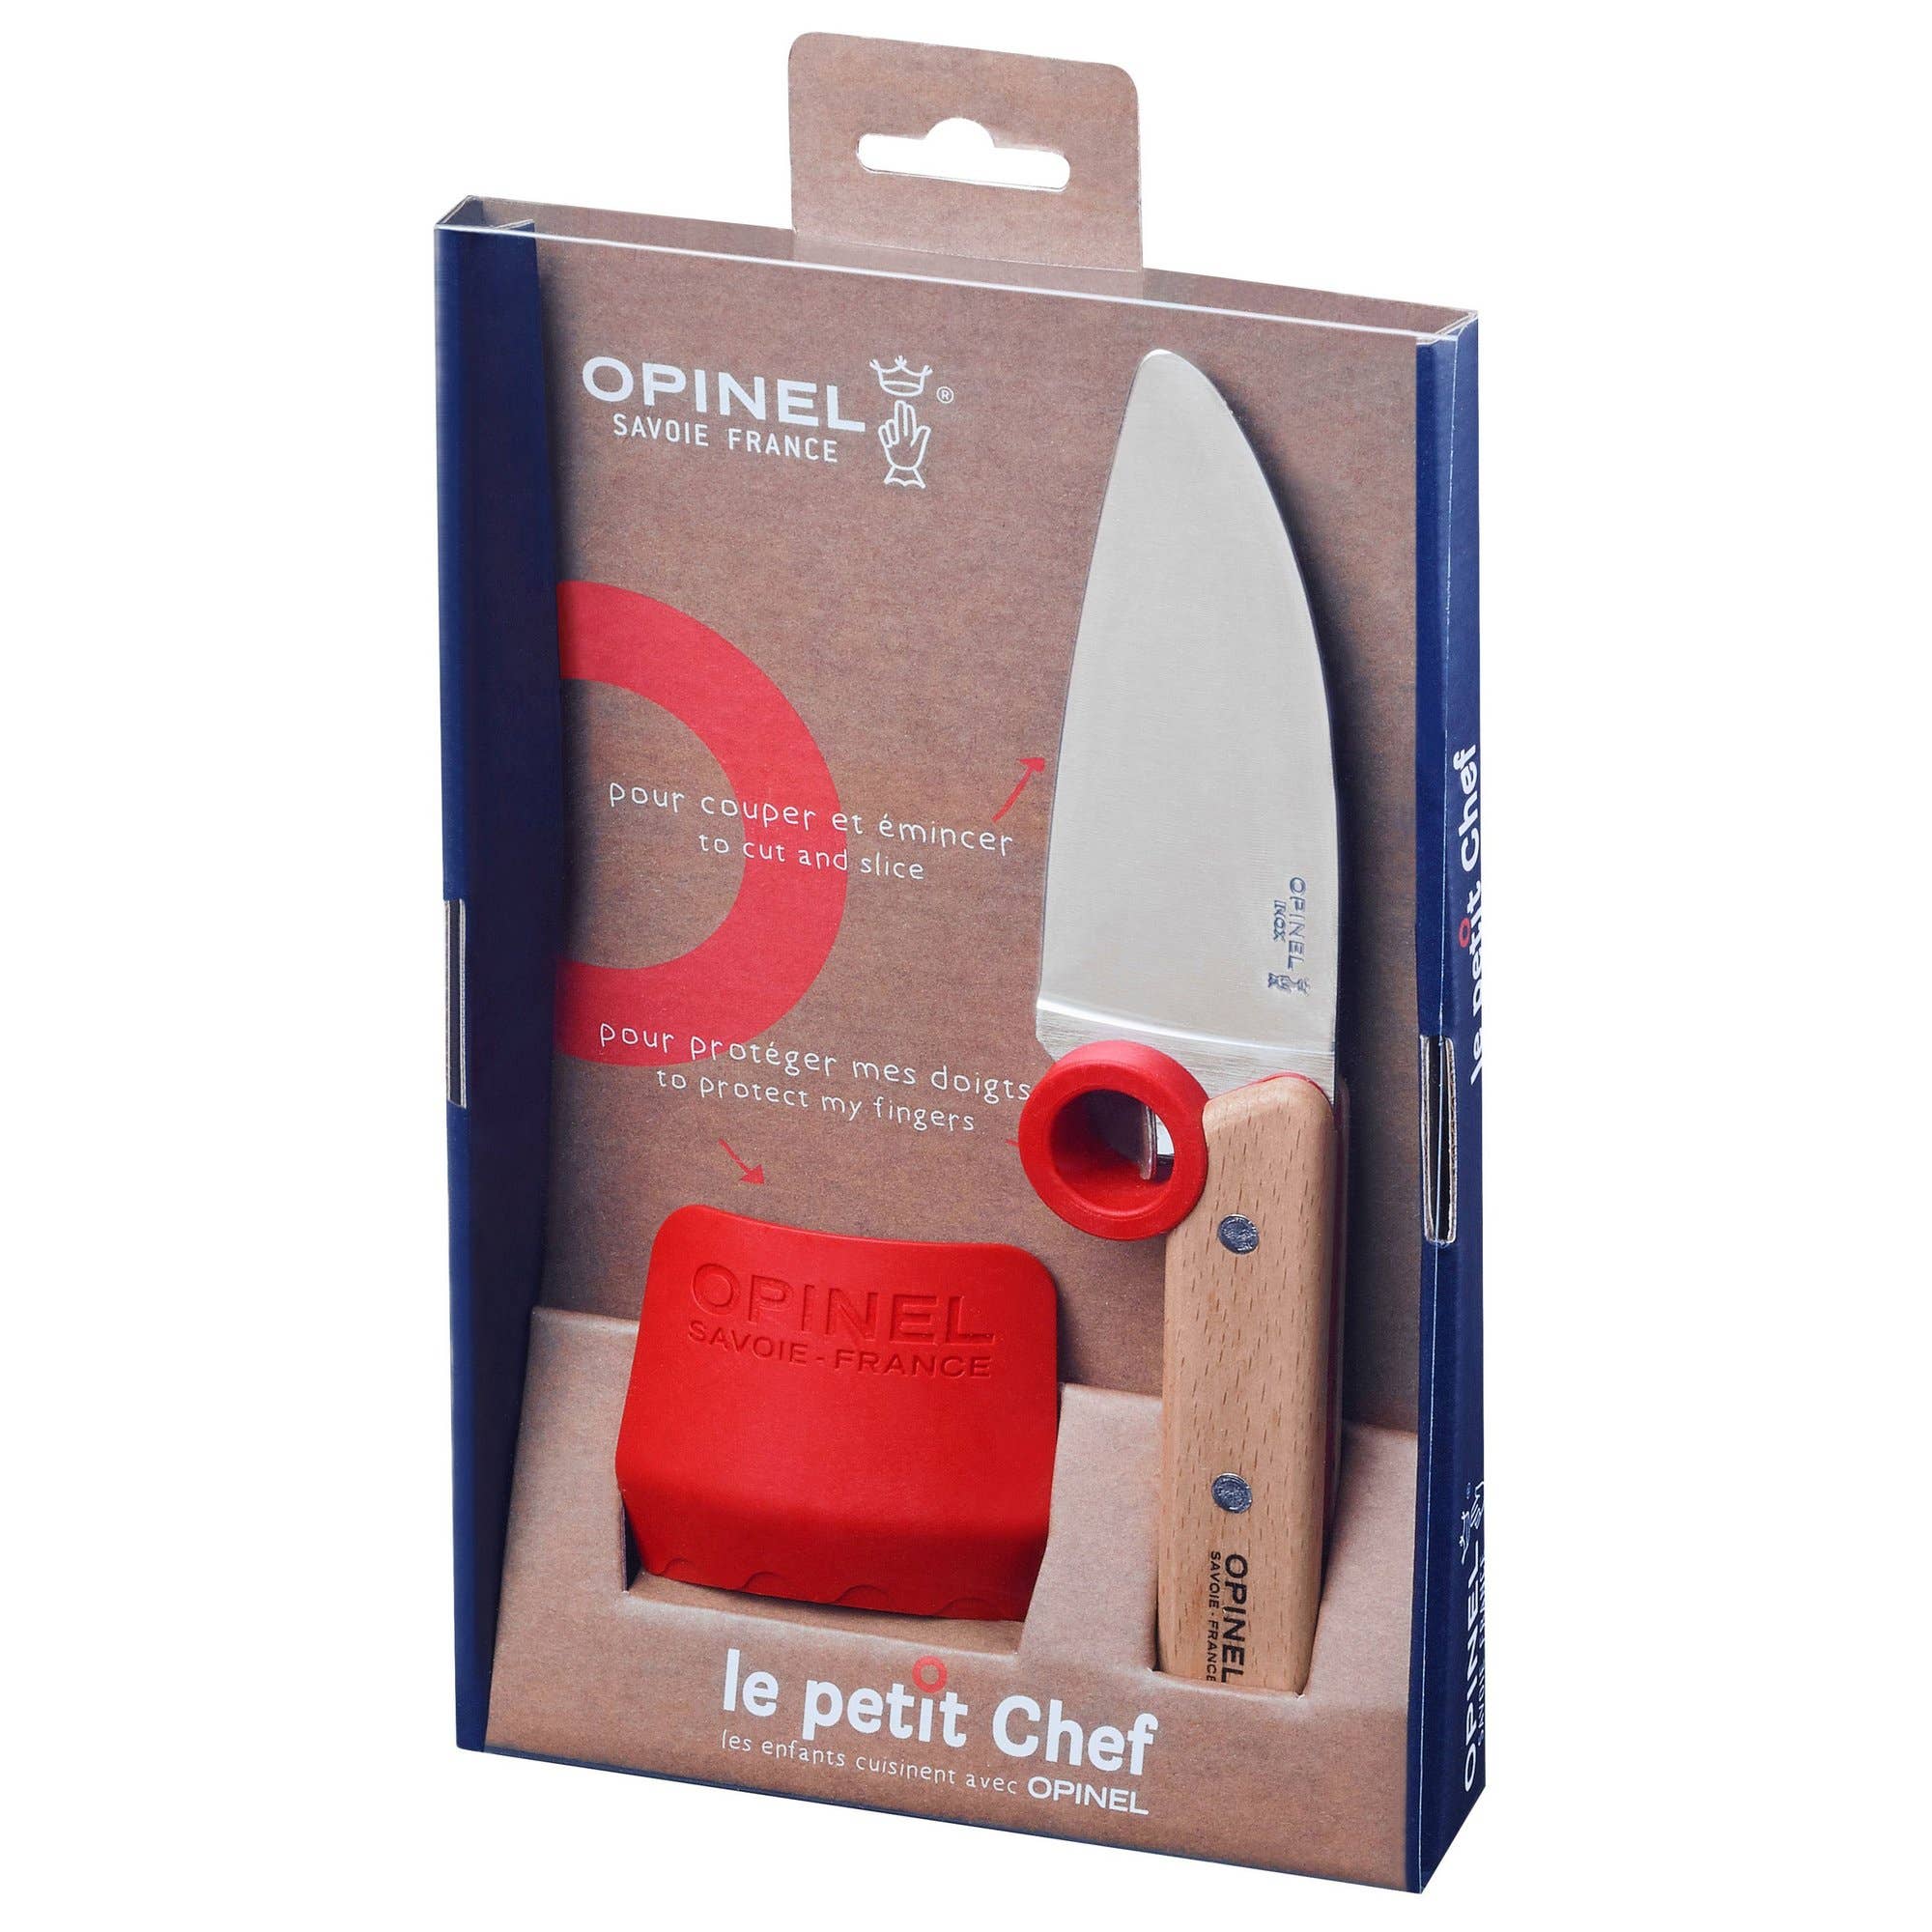 Le Petit Chef 2pc Knife Set for a child